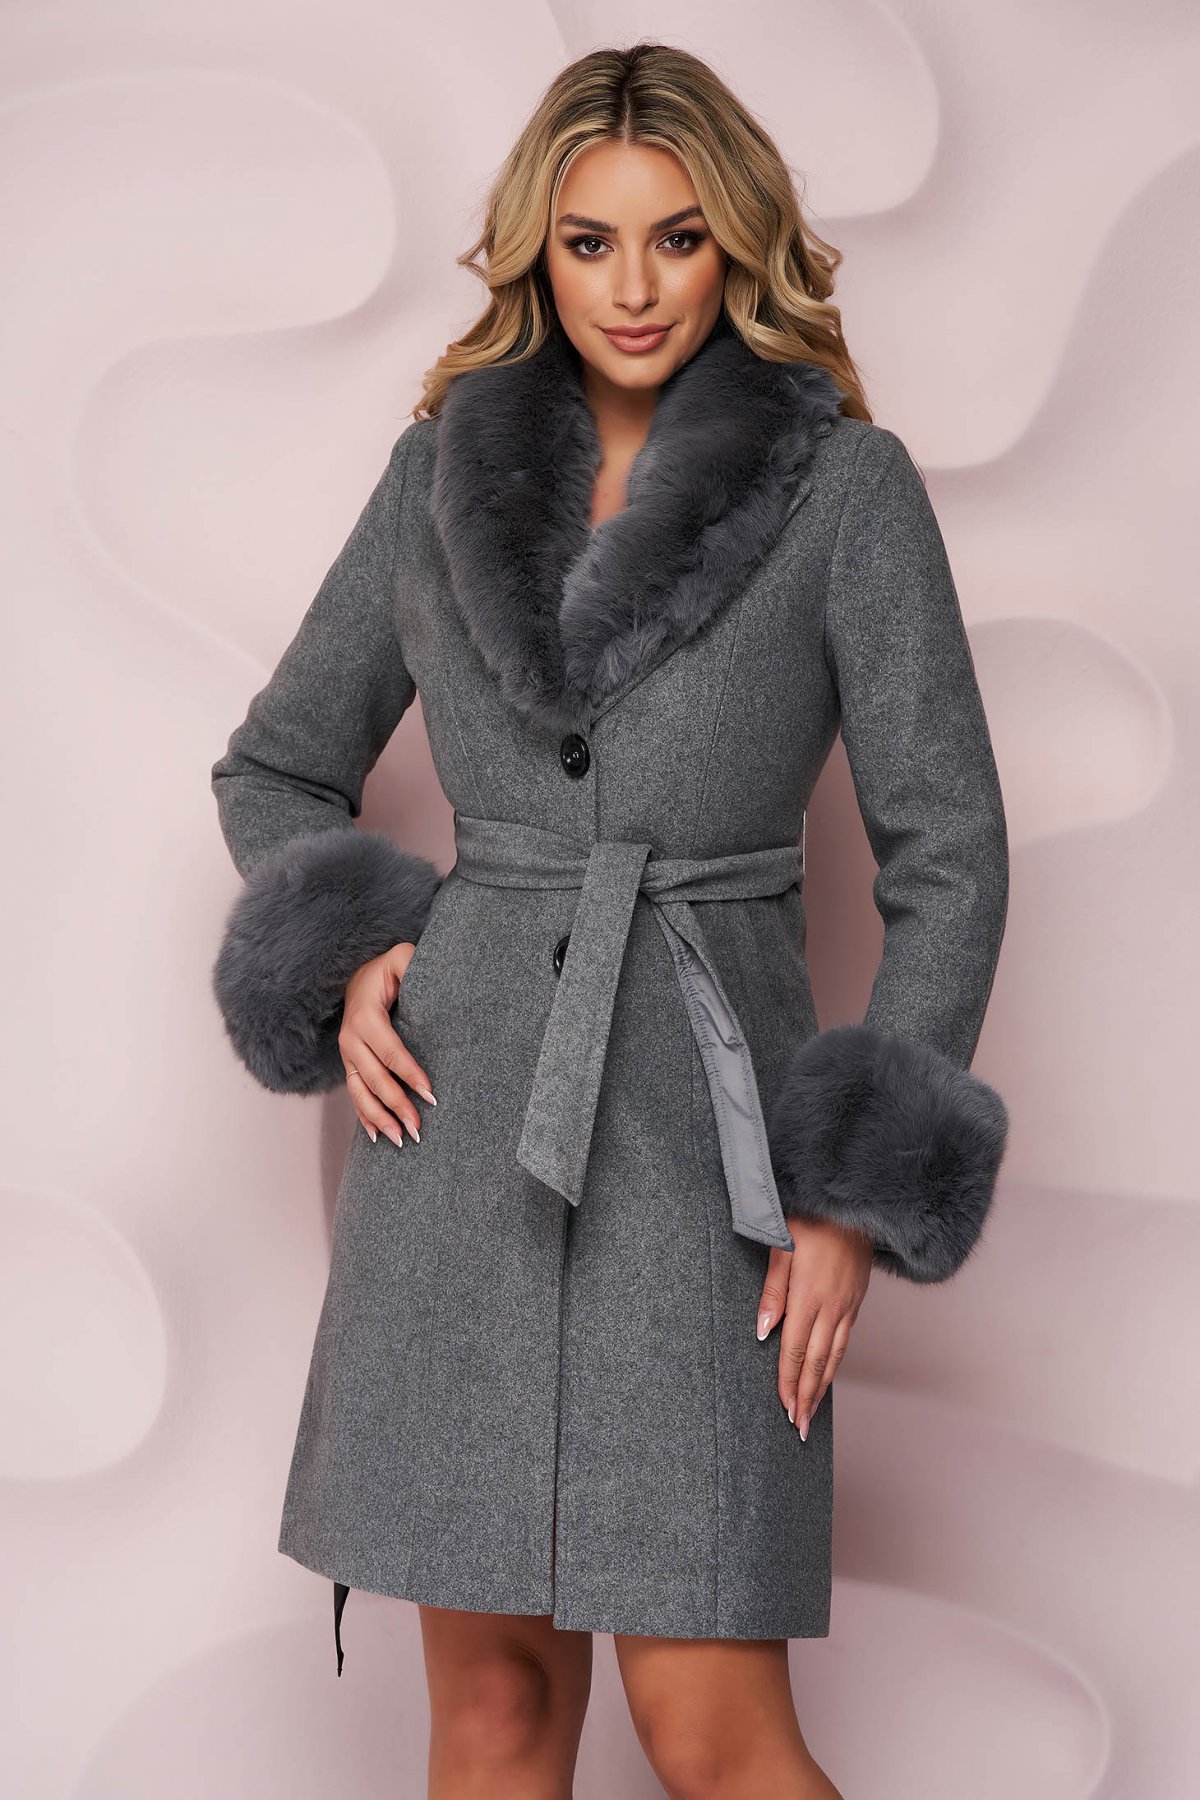 Palton din lana SunShine gri cambrat cu insertii de blana ecologica detasabile la maneci si guler din blana